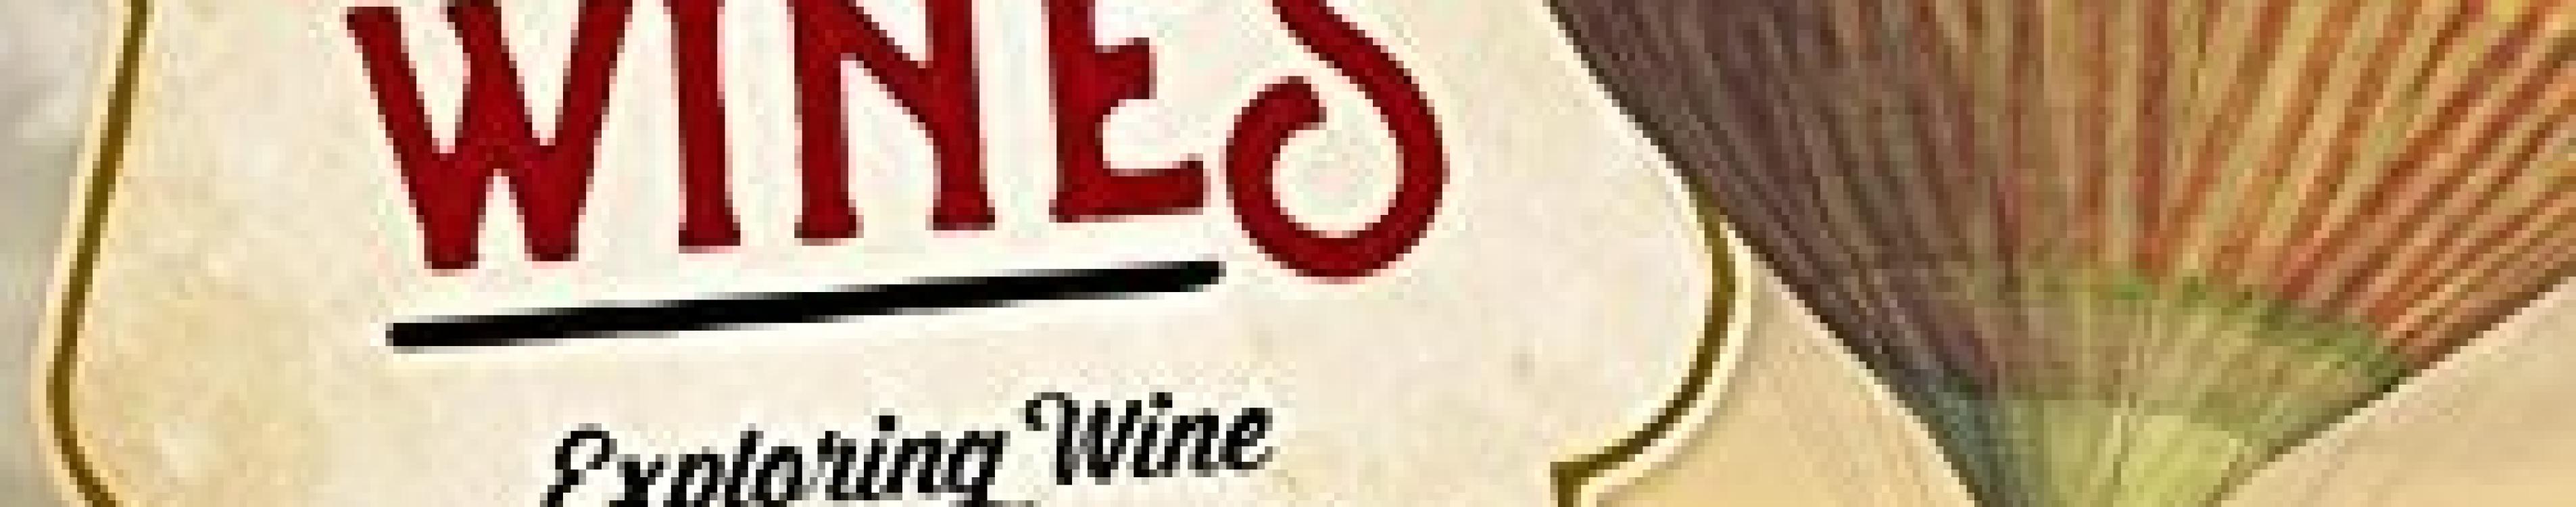 lrg_mike-veseth-book-around-the-world-in-80-wines-nov-.jpg